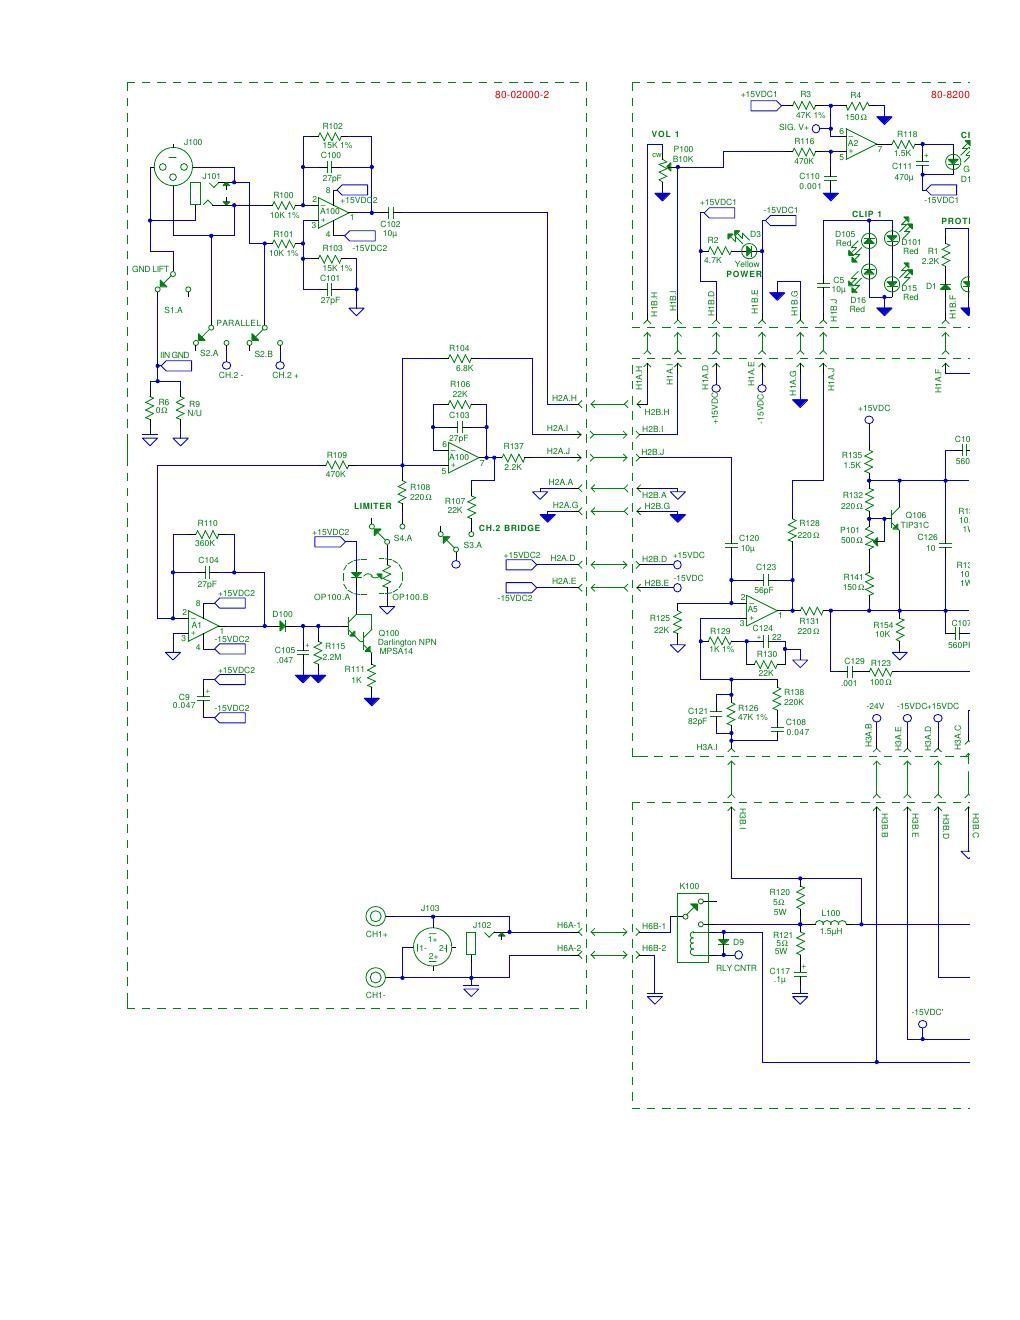 carvin dcm 1500 2000 power amp rev j schematic